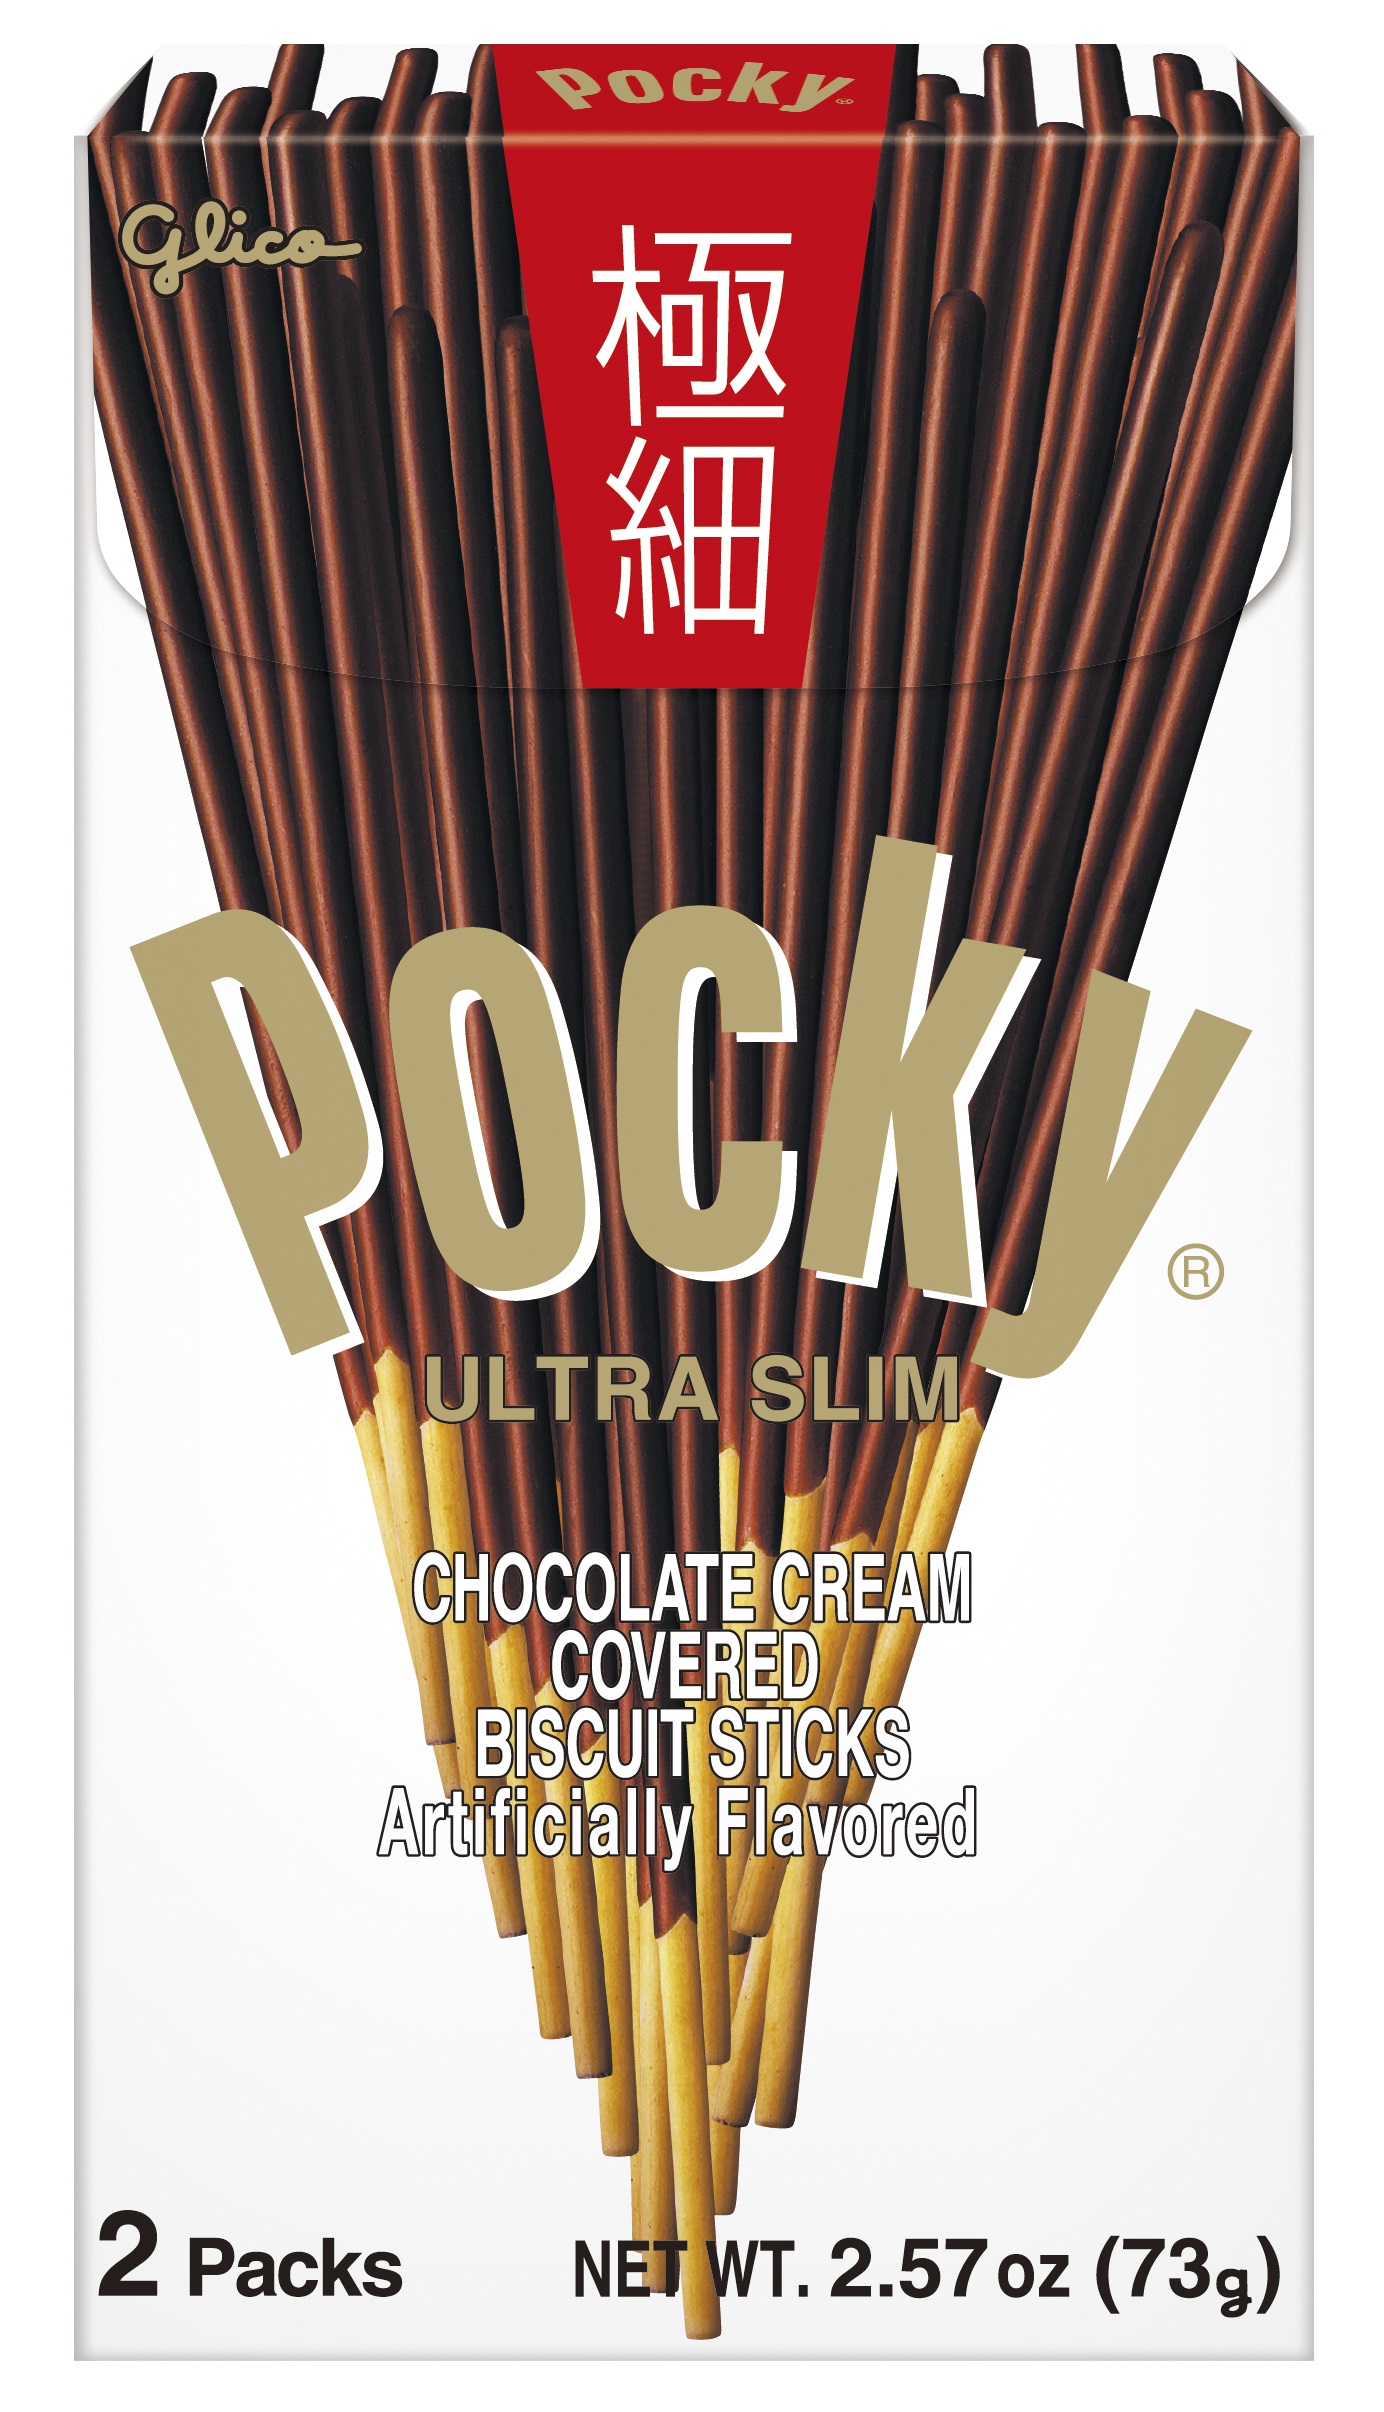 Pocky Ultra Slim  Ezaki Glico USA Corporation